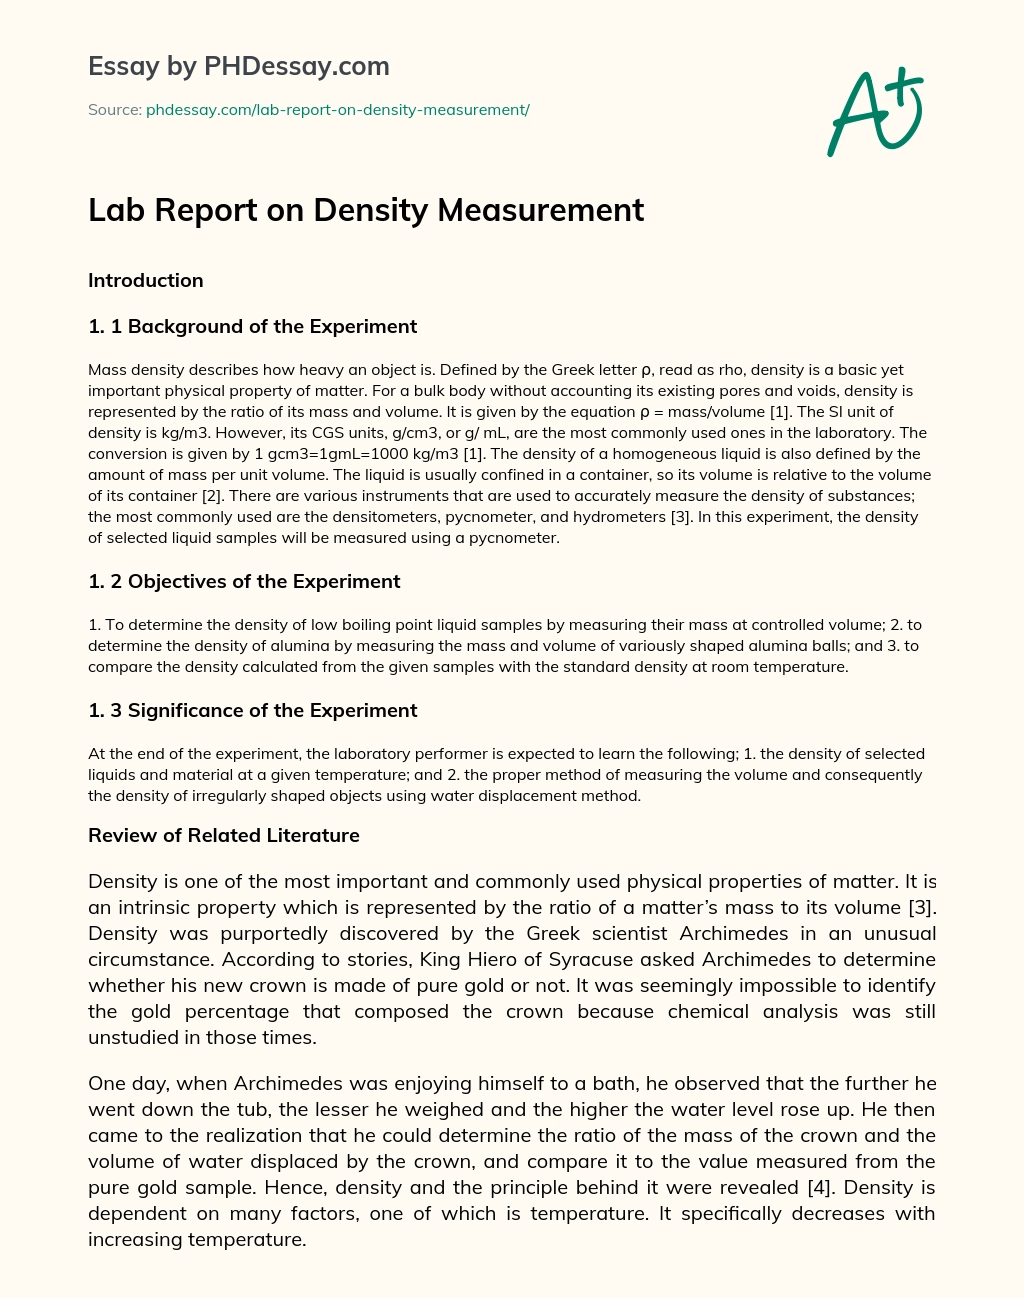 Lab Report on Density Measurement essay